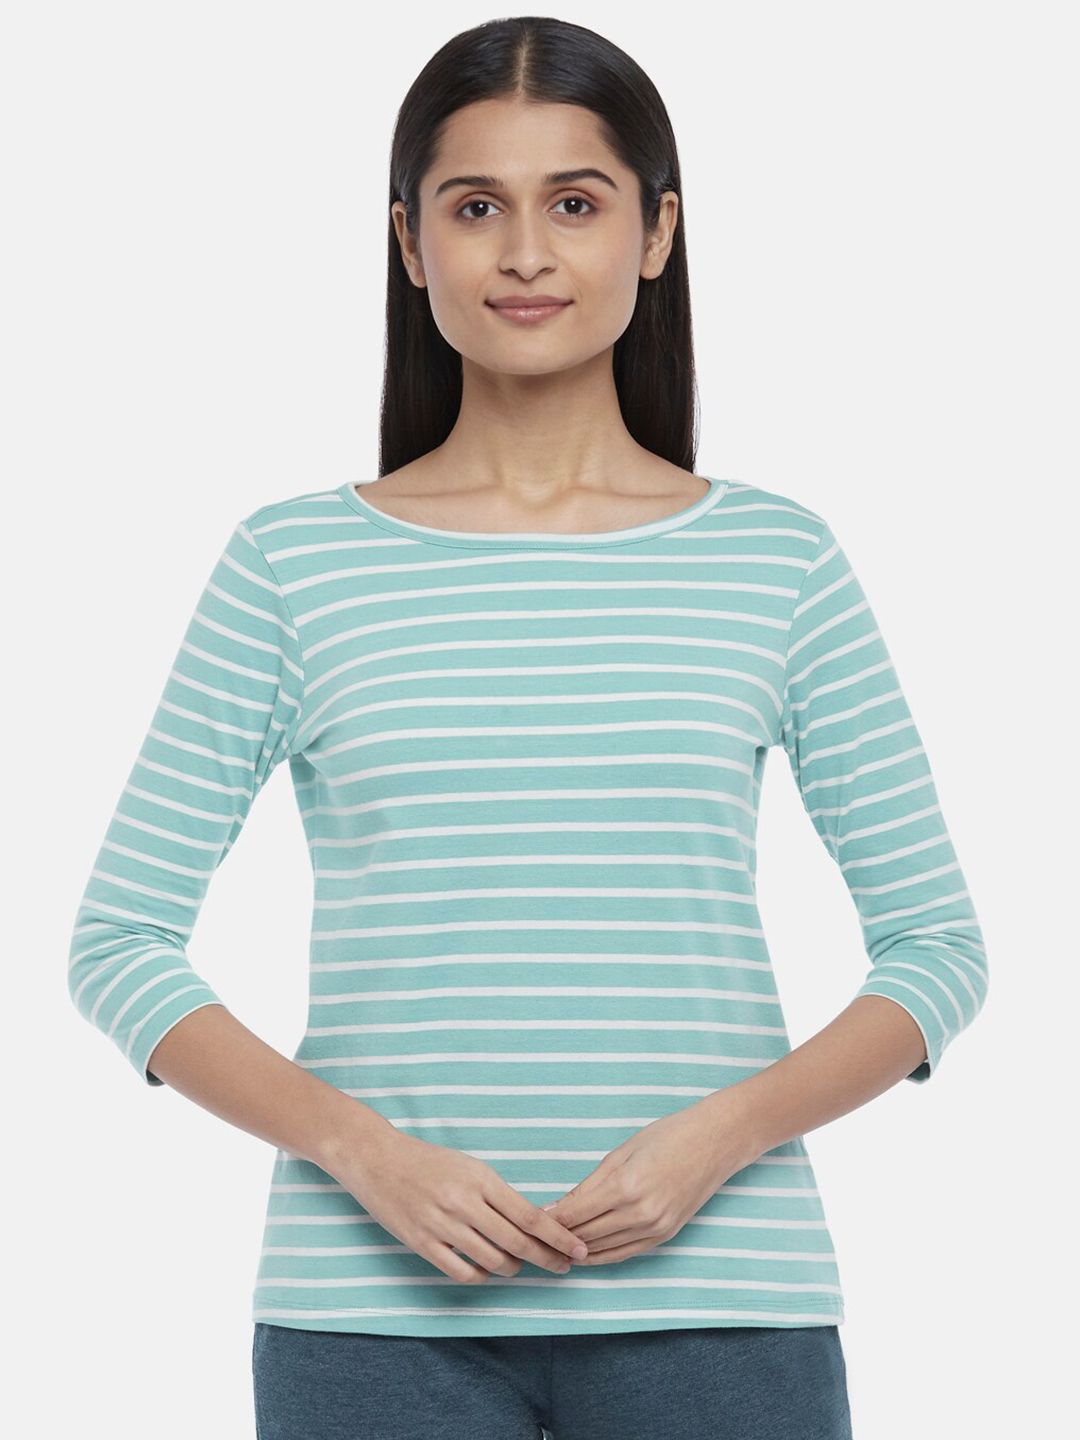 Dreamz by Pantaloons Women Blue Striped Regular Lounge tshirt Price in India